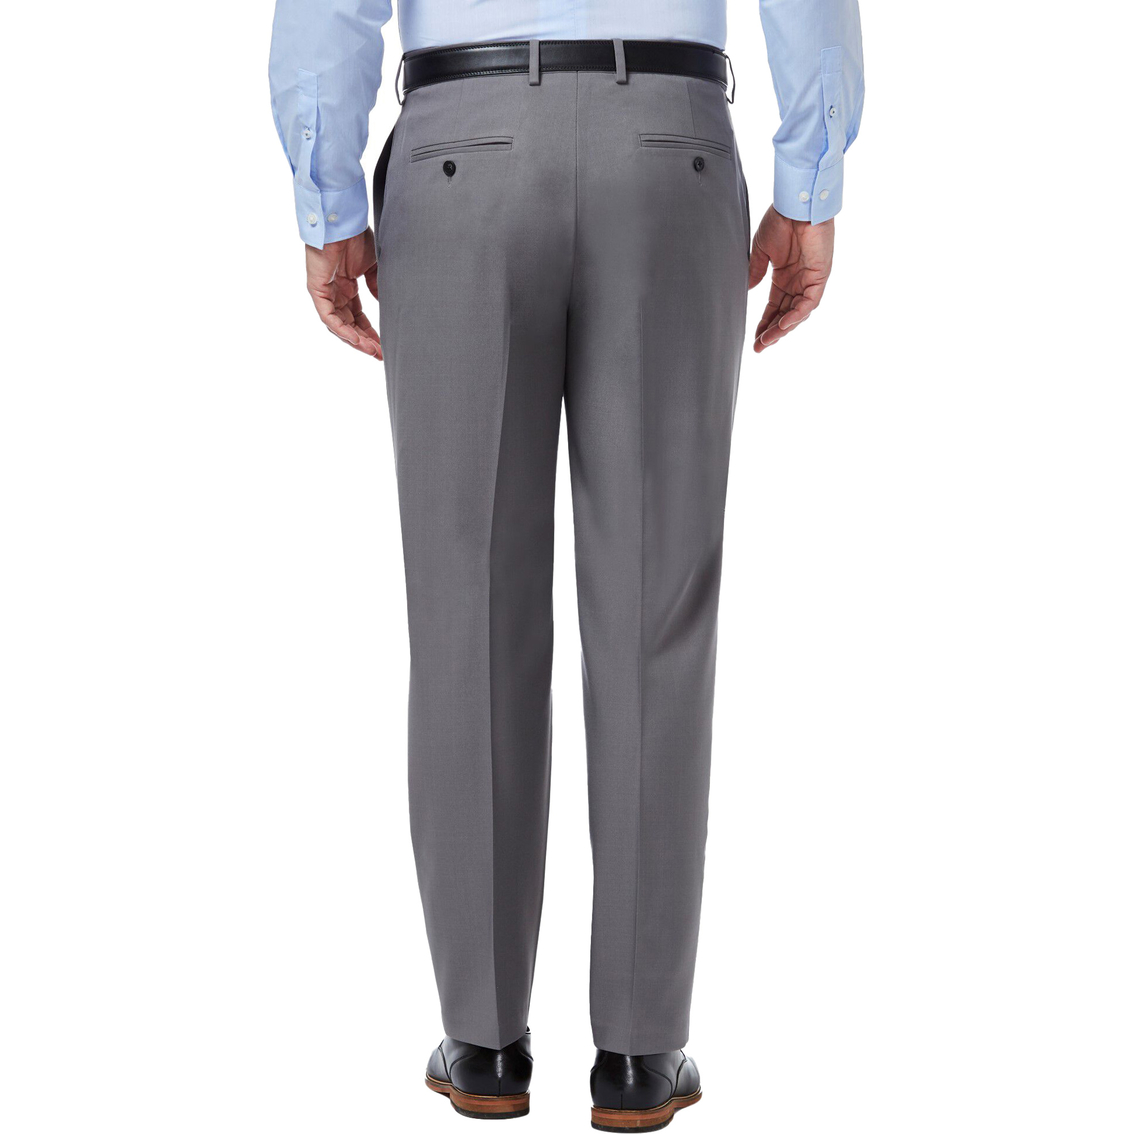 Haggar Premium Comfort 4 Way Stretch Classic Fit Flat Front Pants - Image 2 of 5